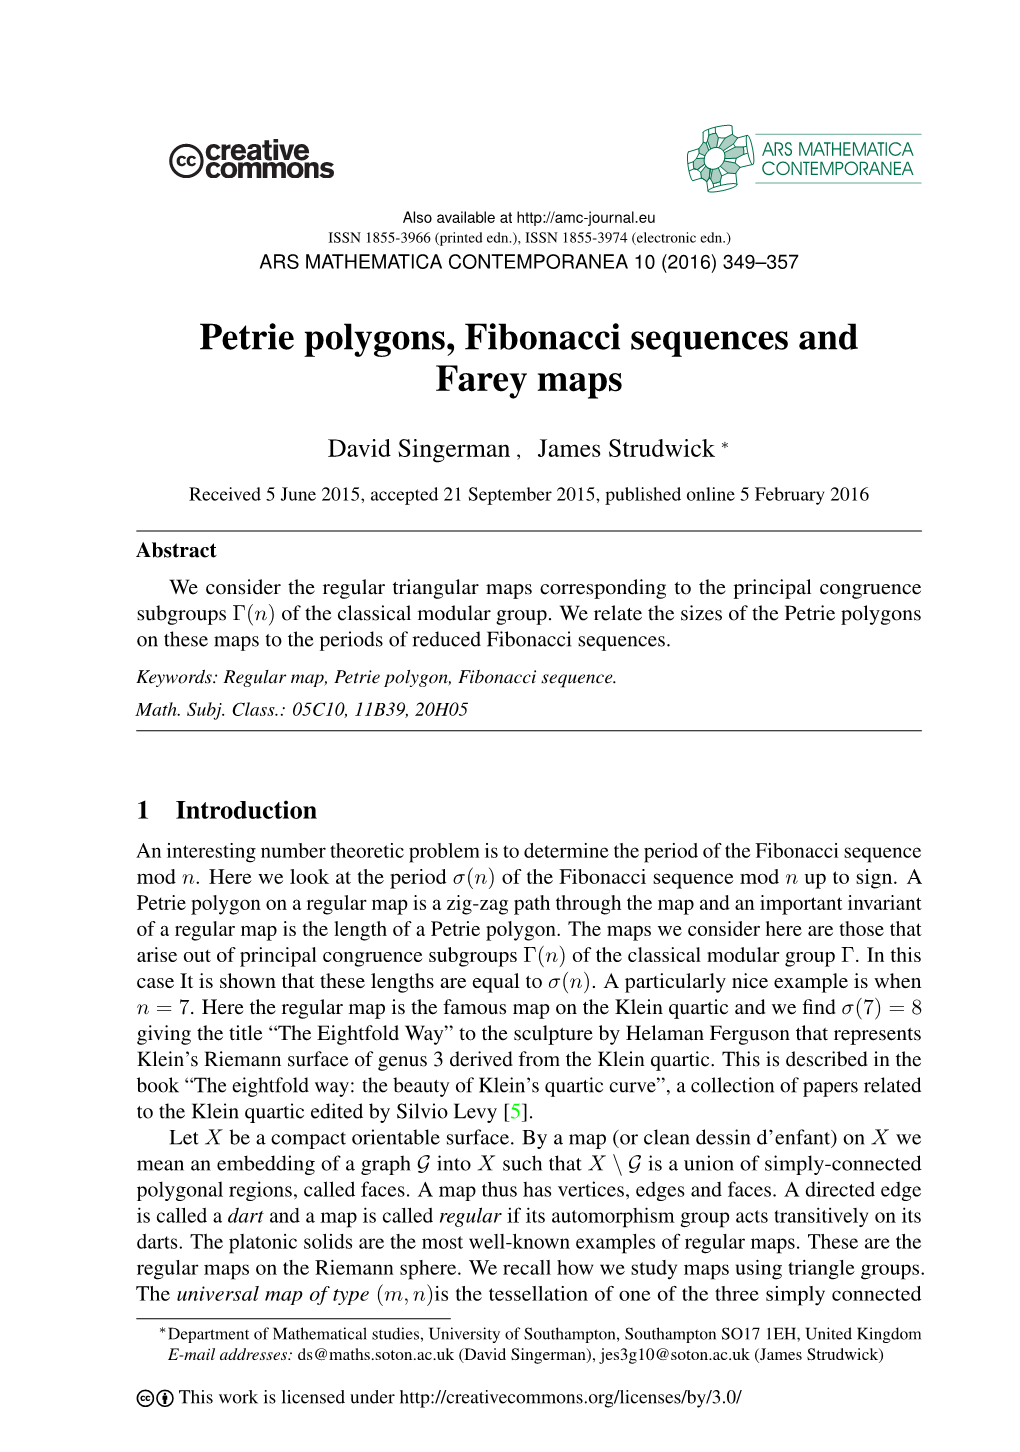 Petrie Polygons, Fibonacci Sequences and Farey Maps